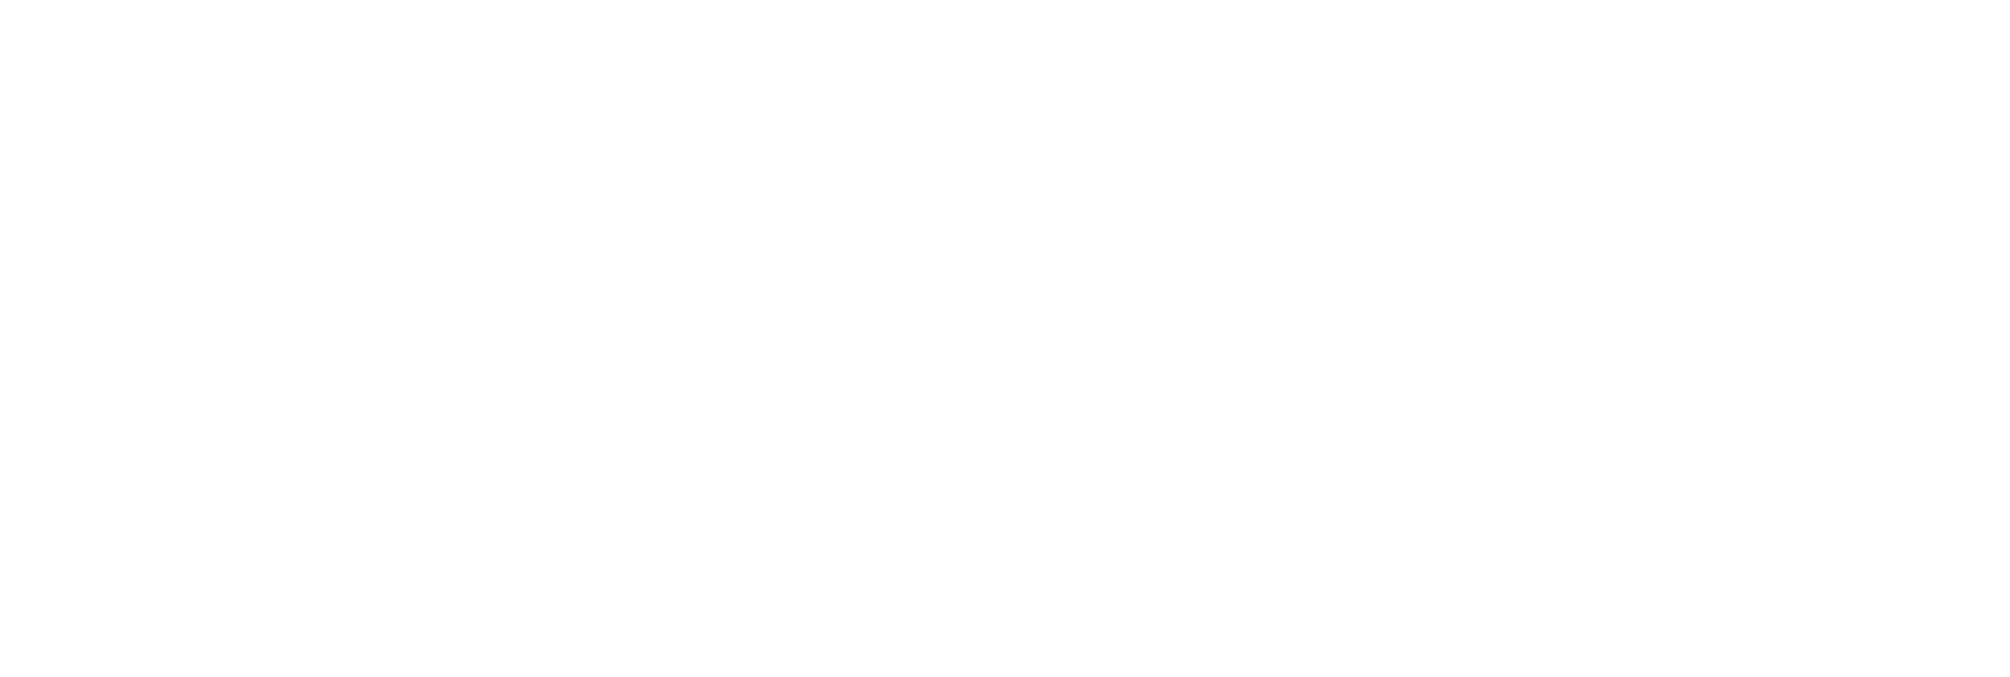 iris galerie logo bianco con tagline